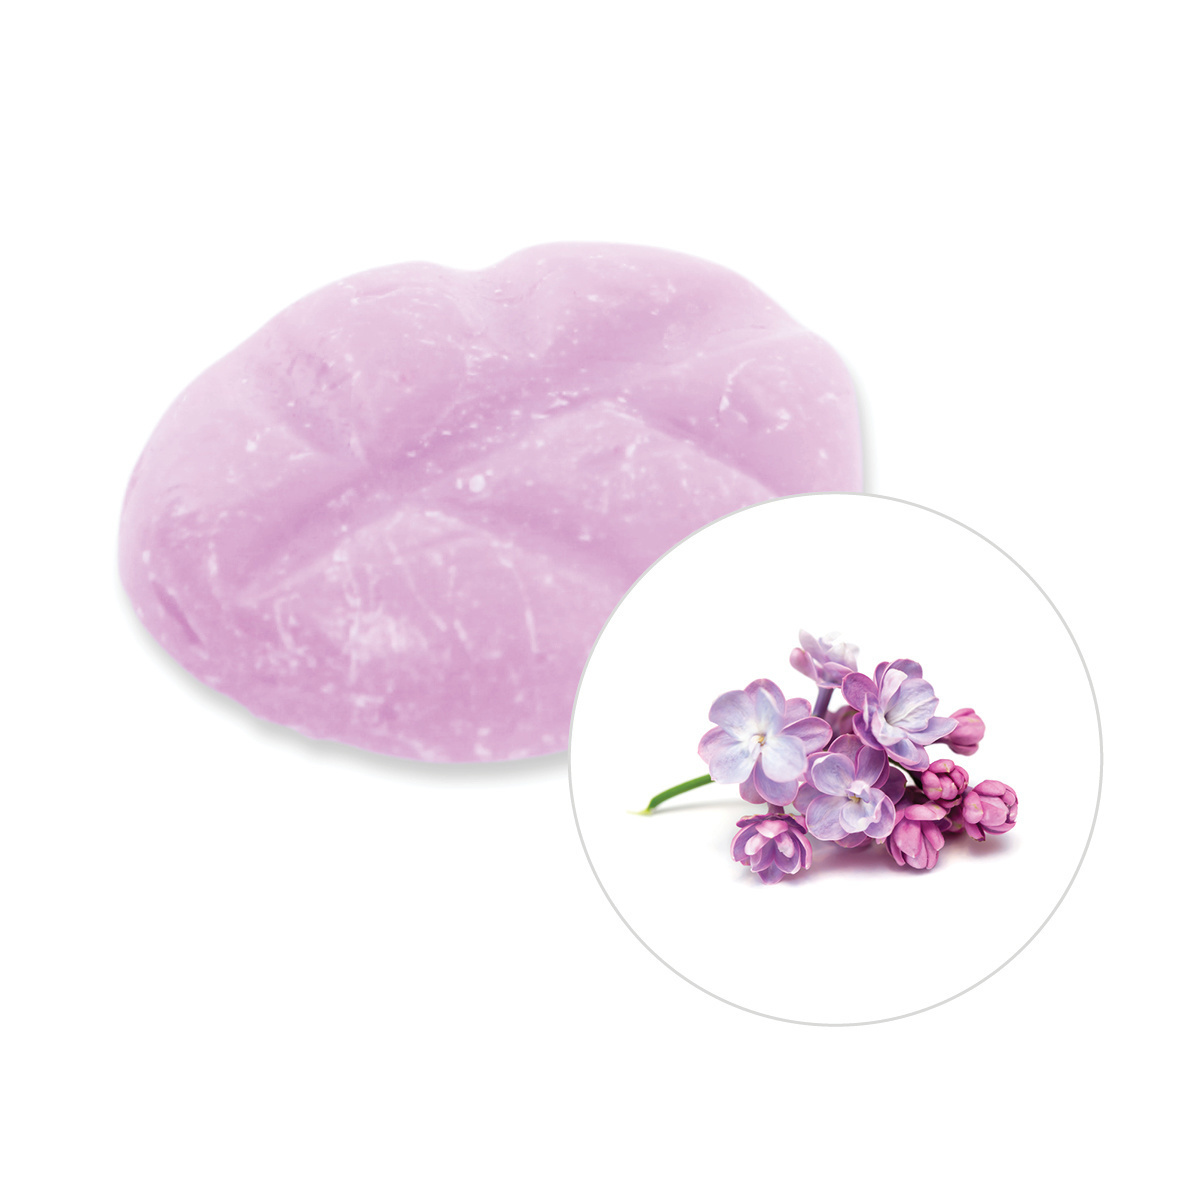 Scentchips® Lilac wax melts